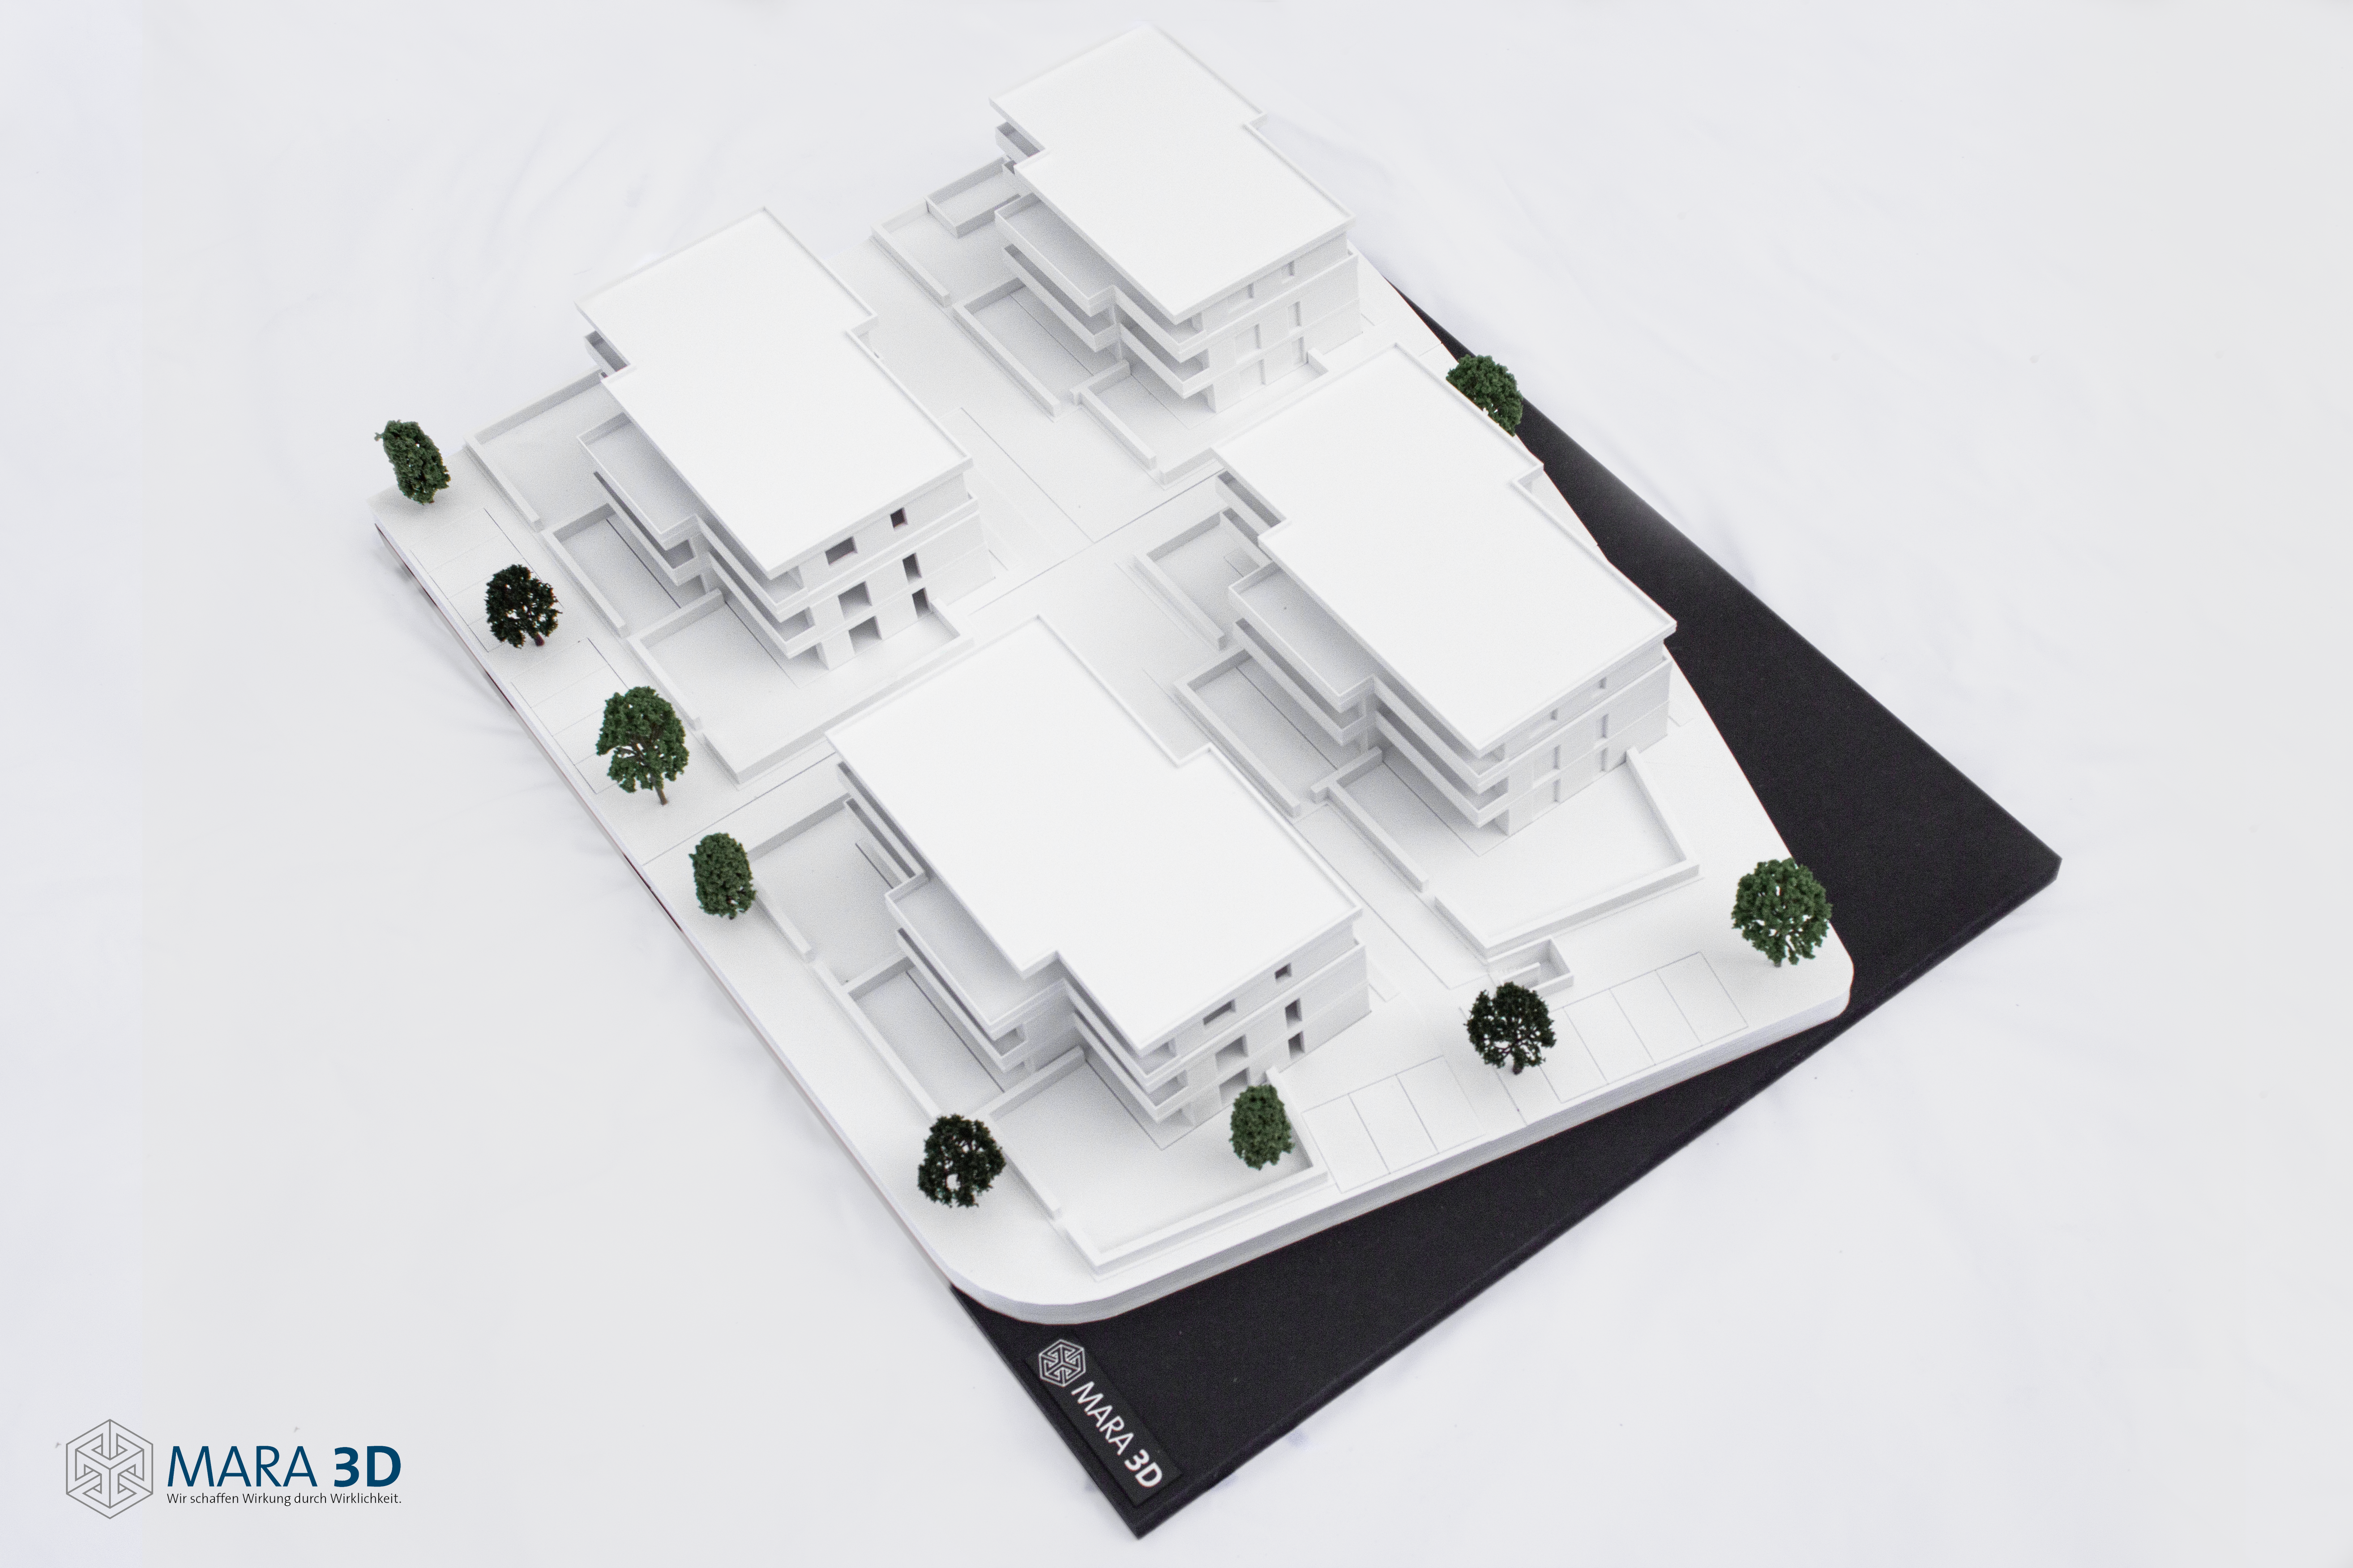 MARA 3D Architekturmodel Quartier04